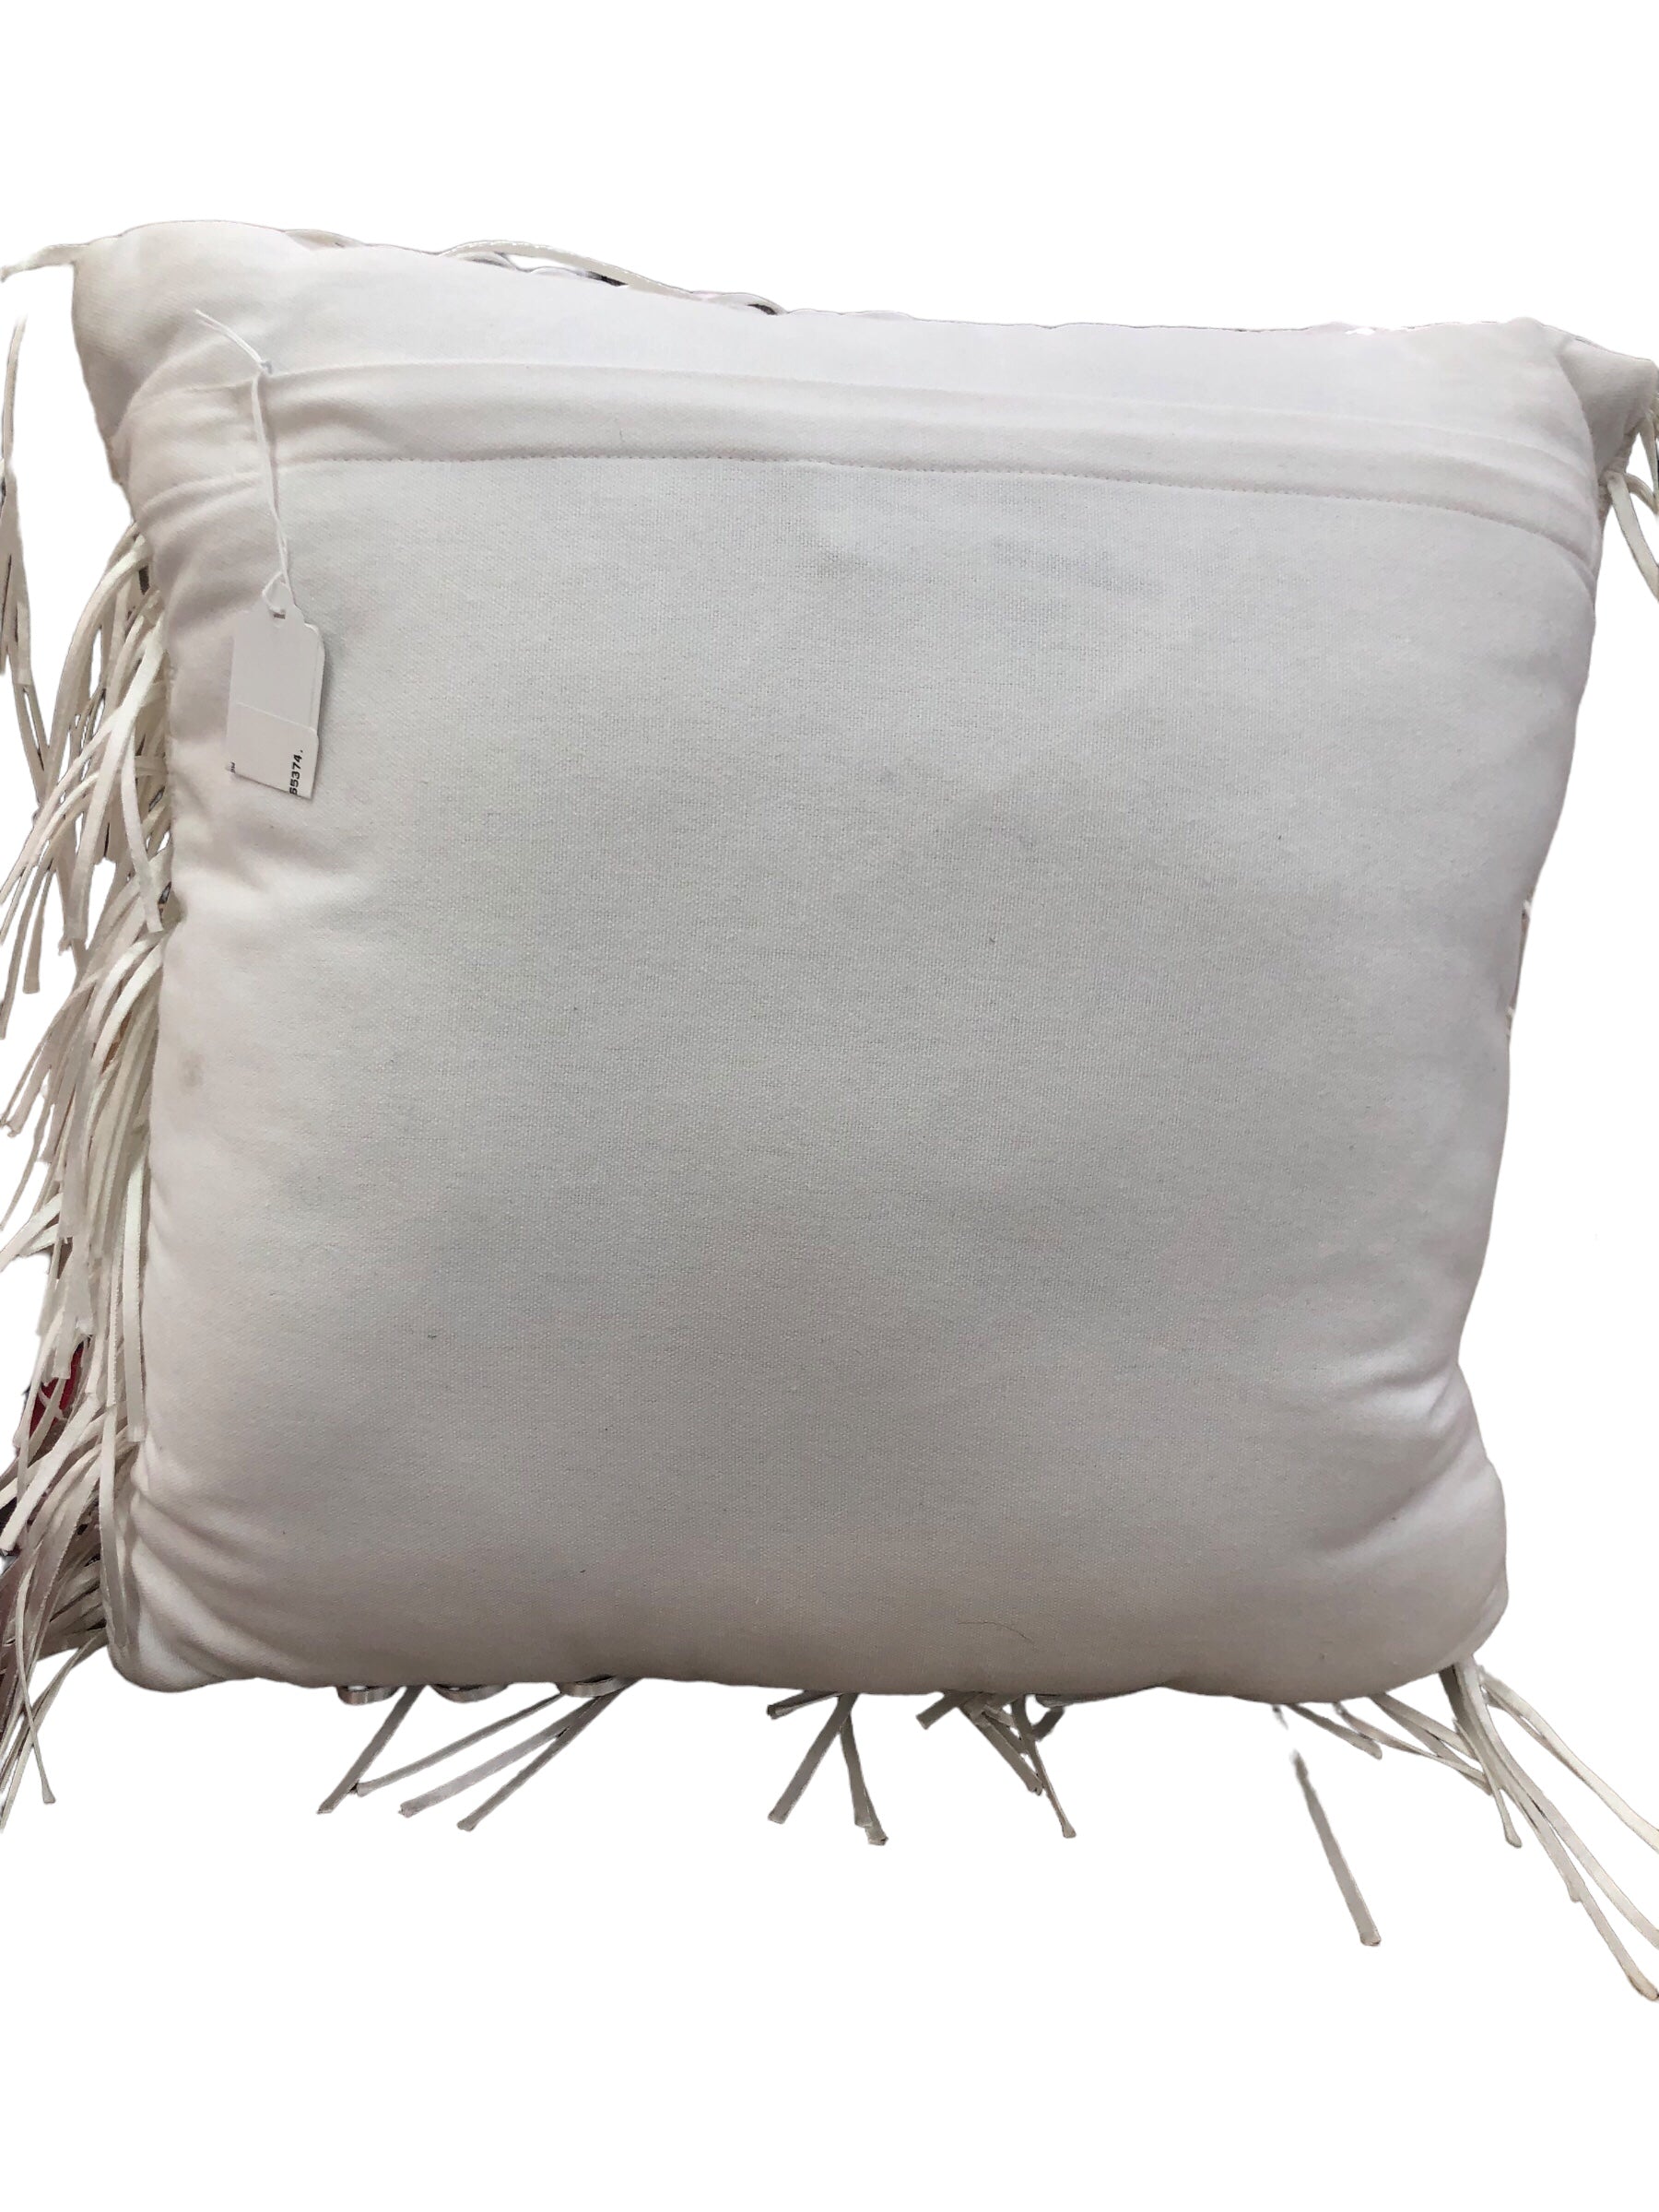 White Leather Fringe Pillow